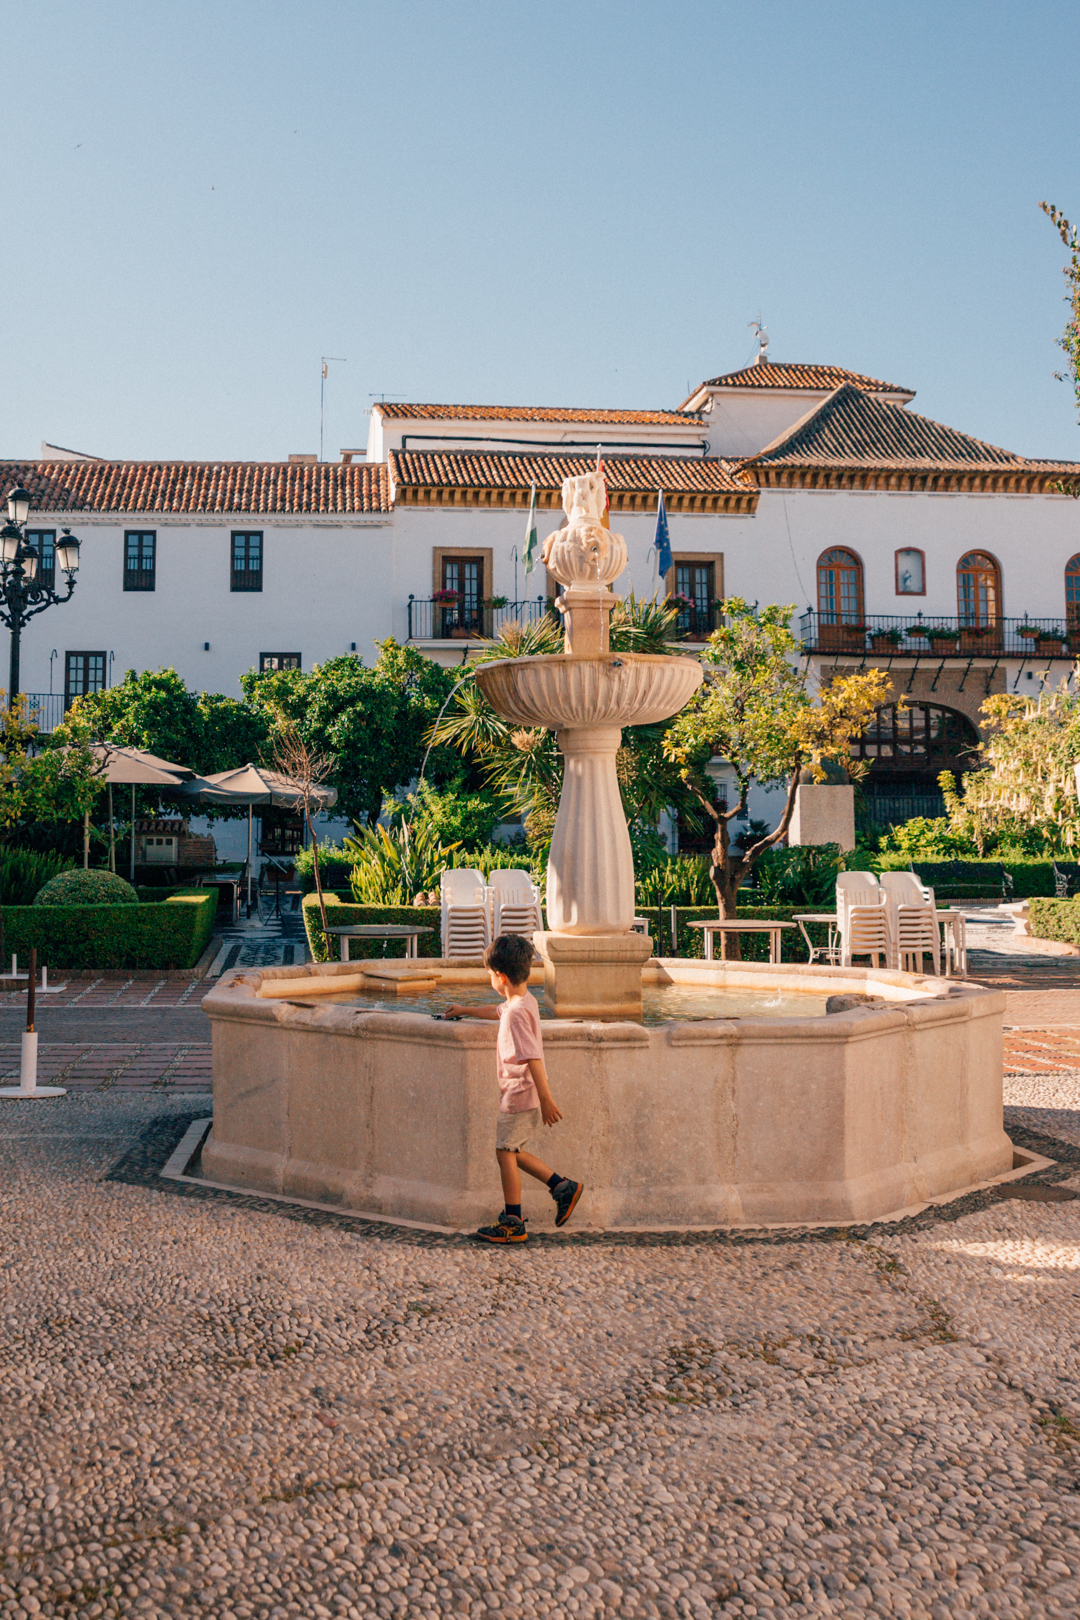 Plaza de los naranjos in marbella old town, southern spain